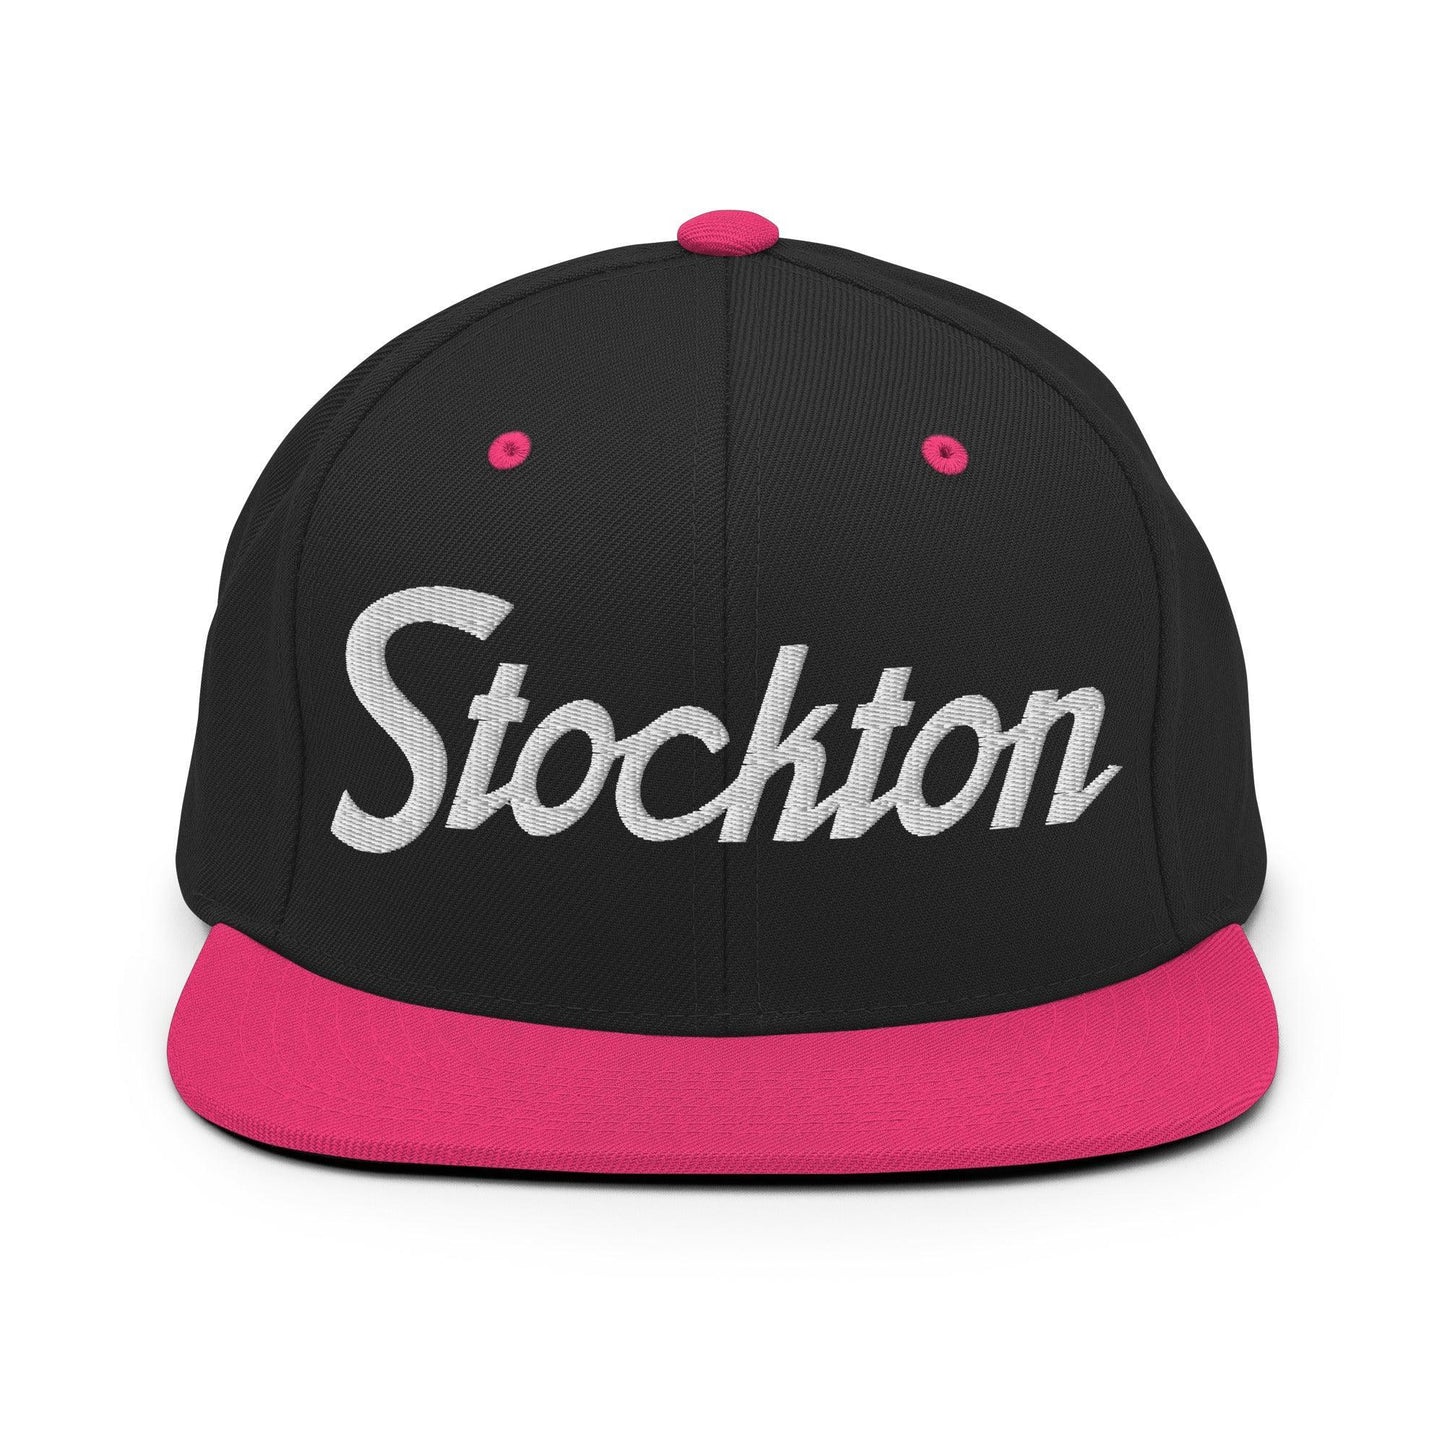 Stockton Script Snapback Hat Black Neon Pink